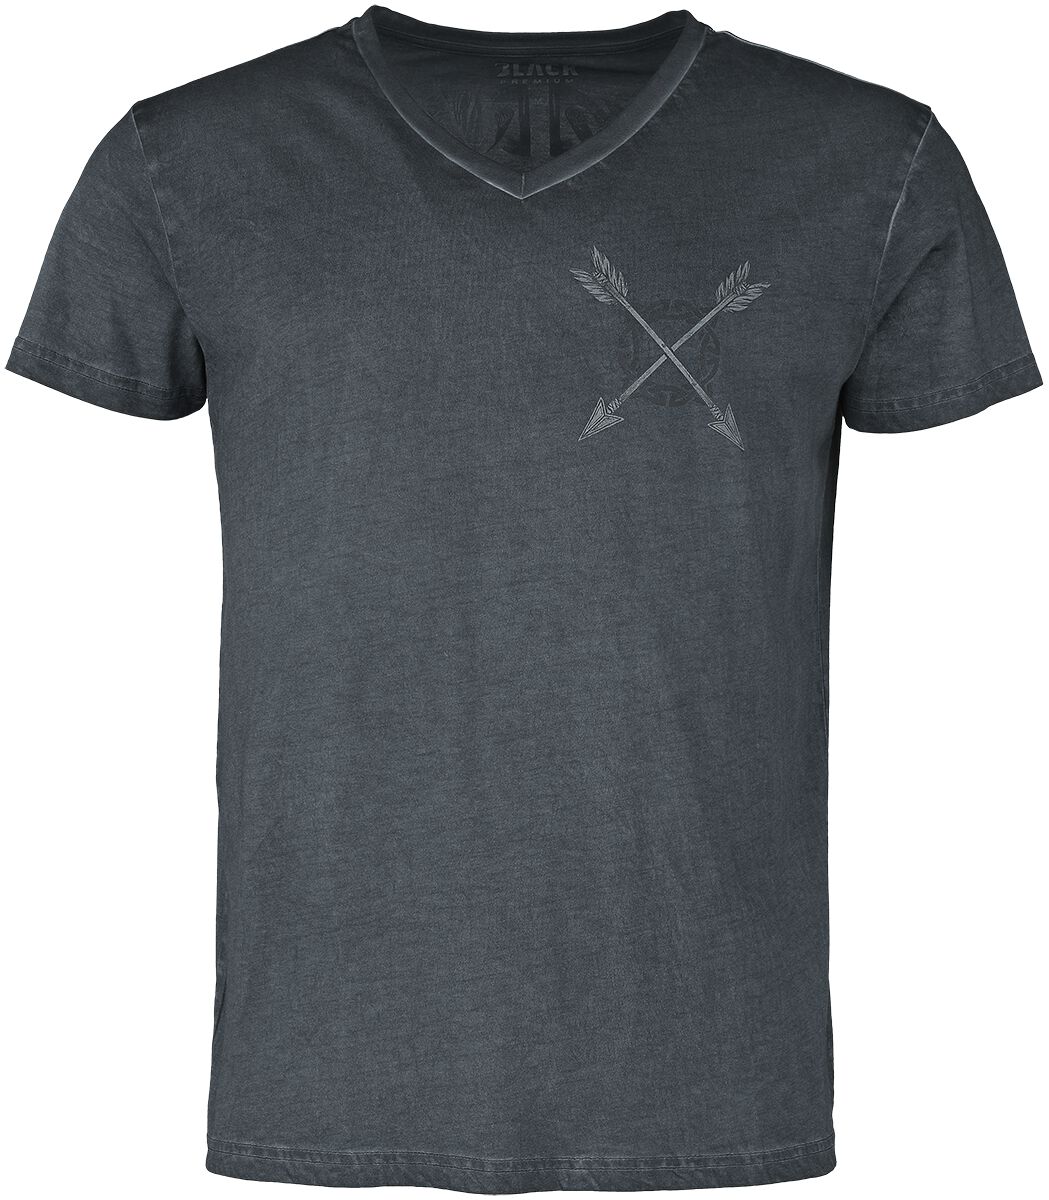 T-Shirt Manches courtes de Black Premium by EMP - T-Shirt mit detailreichem Wolfsprint - S à 5XL - p